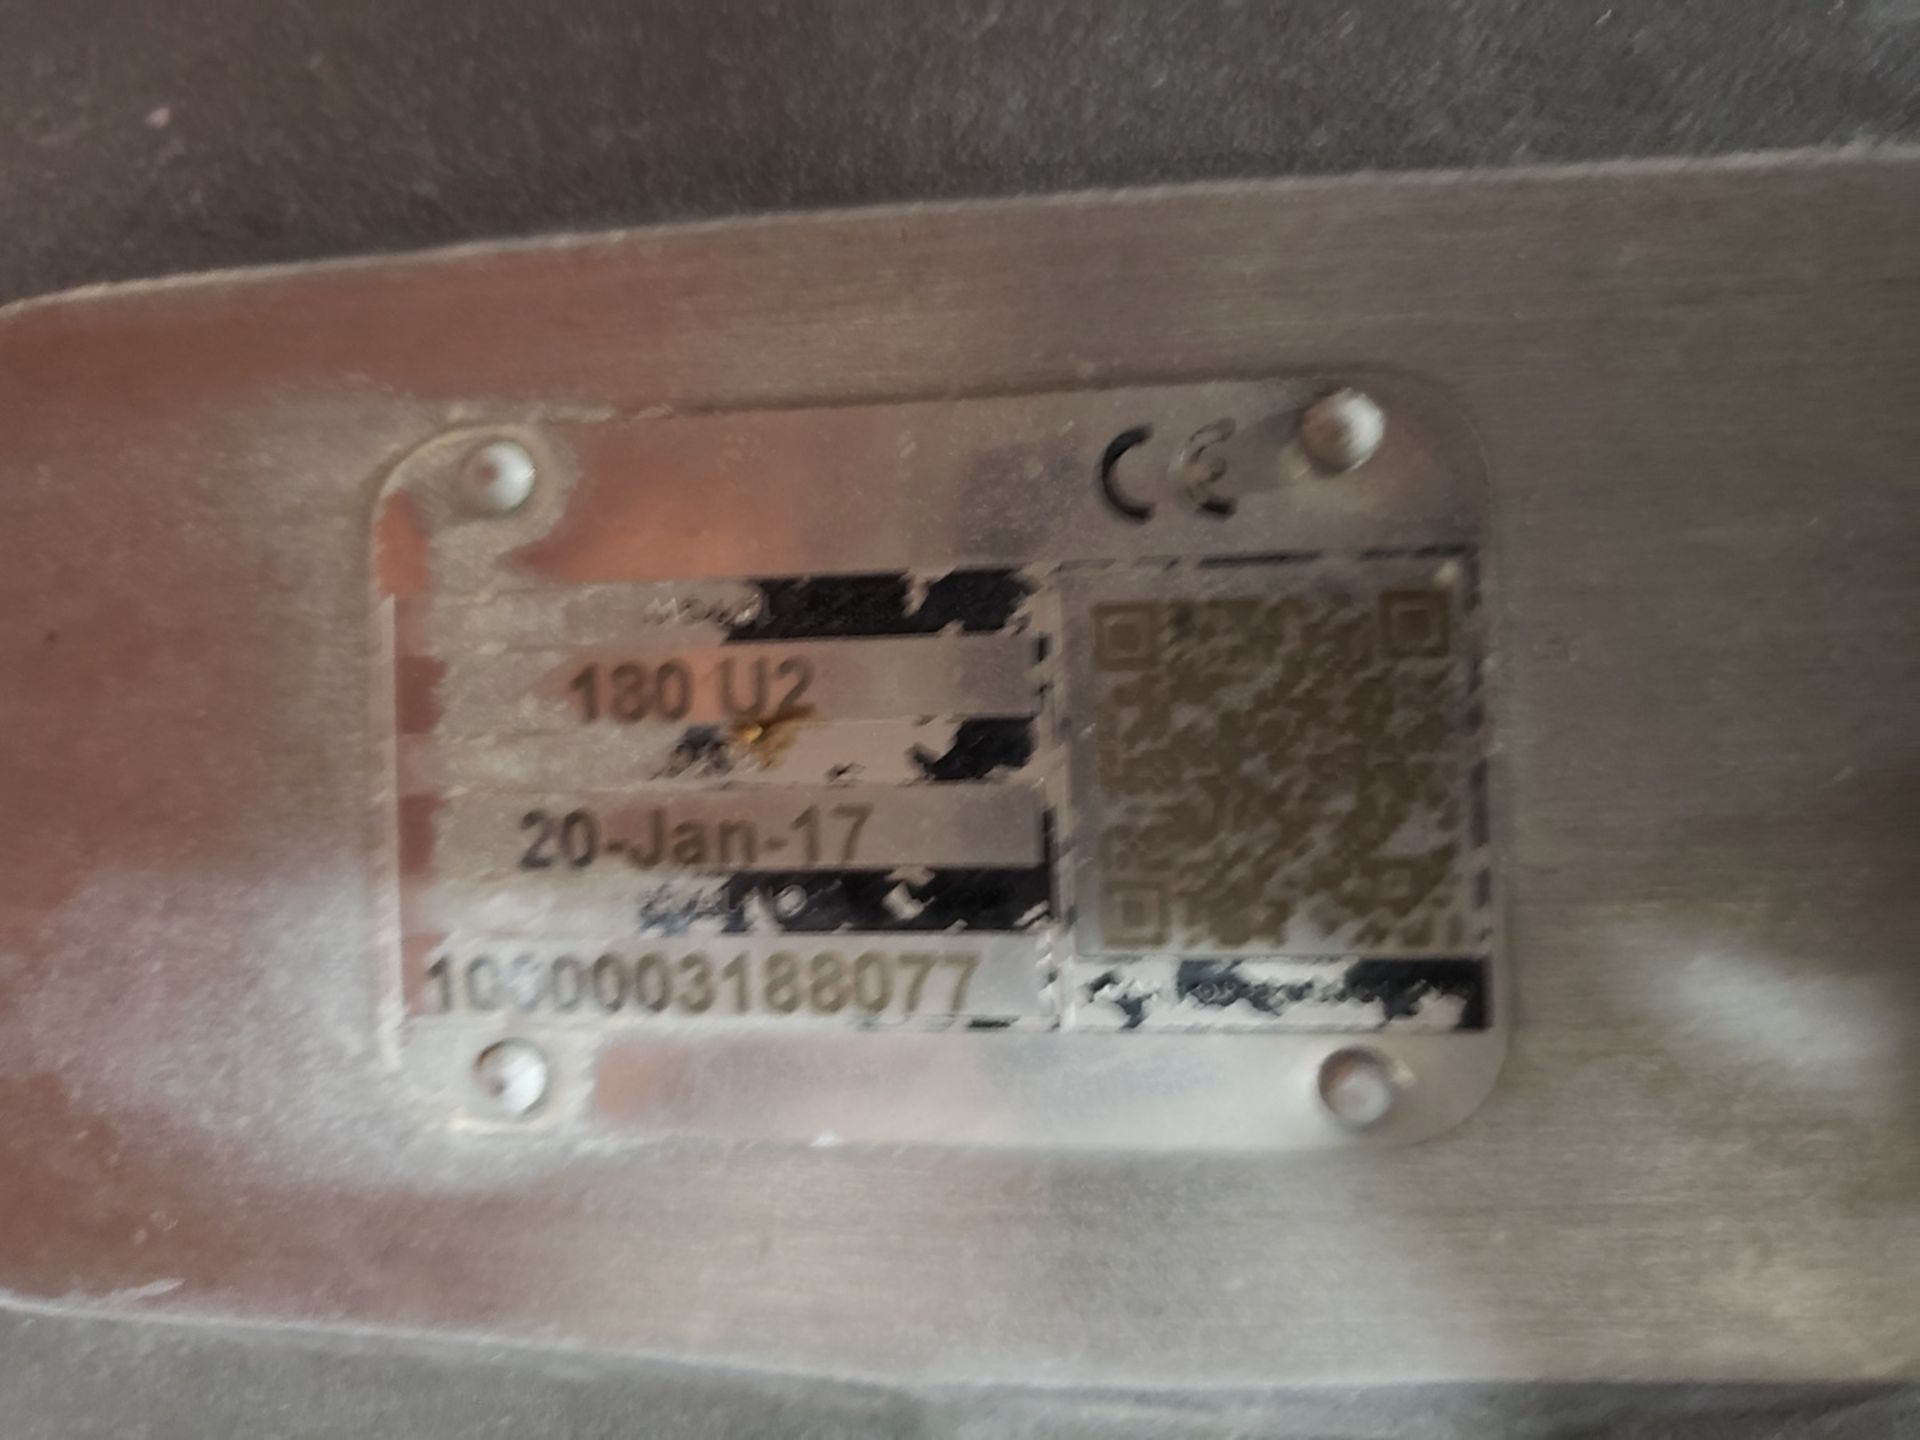 Waukesha Cherry Burrell SPX Positive Displacement Pump, M# 180-U2, S/N 1000003188077 | Rig Fee $150 - Image 2 of 2